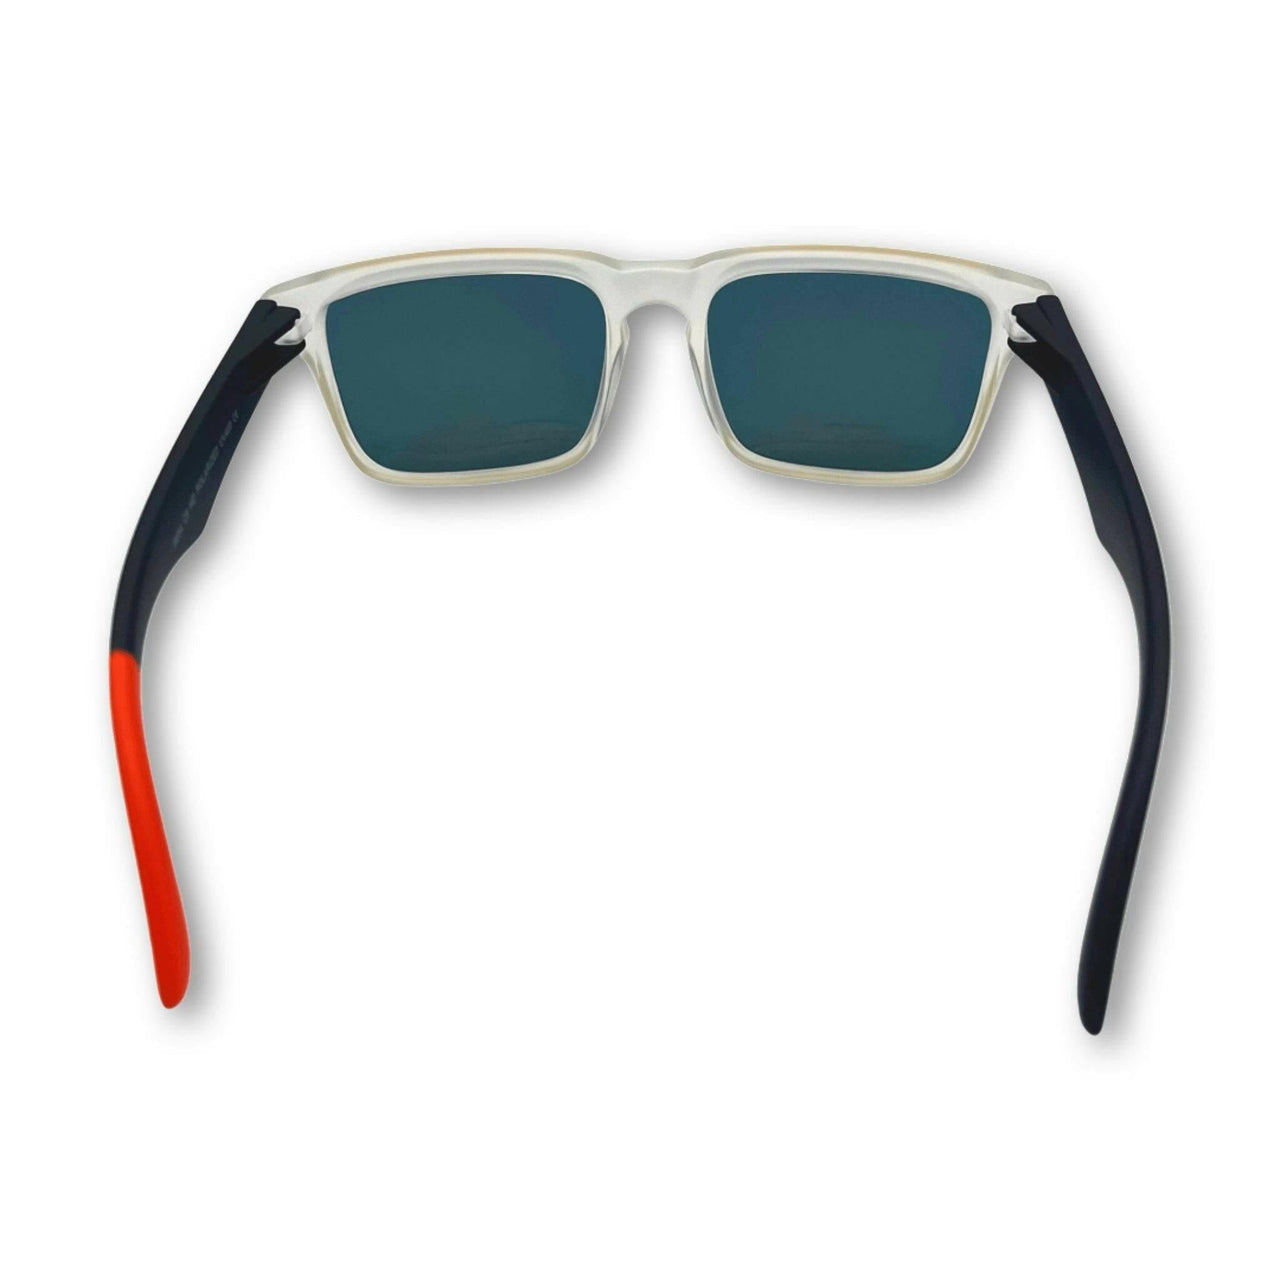 Hustler Orange Frosted Sunglasses - Rebel Reaper Clothing Company Sunglasses